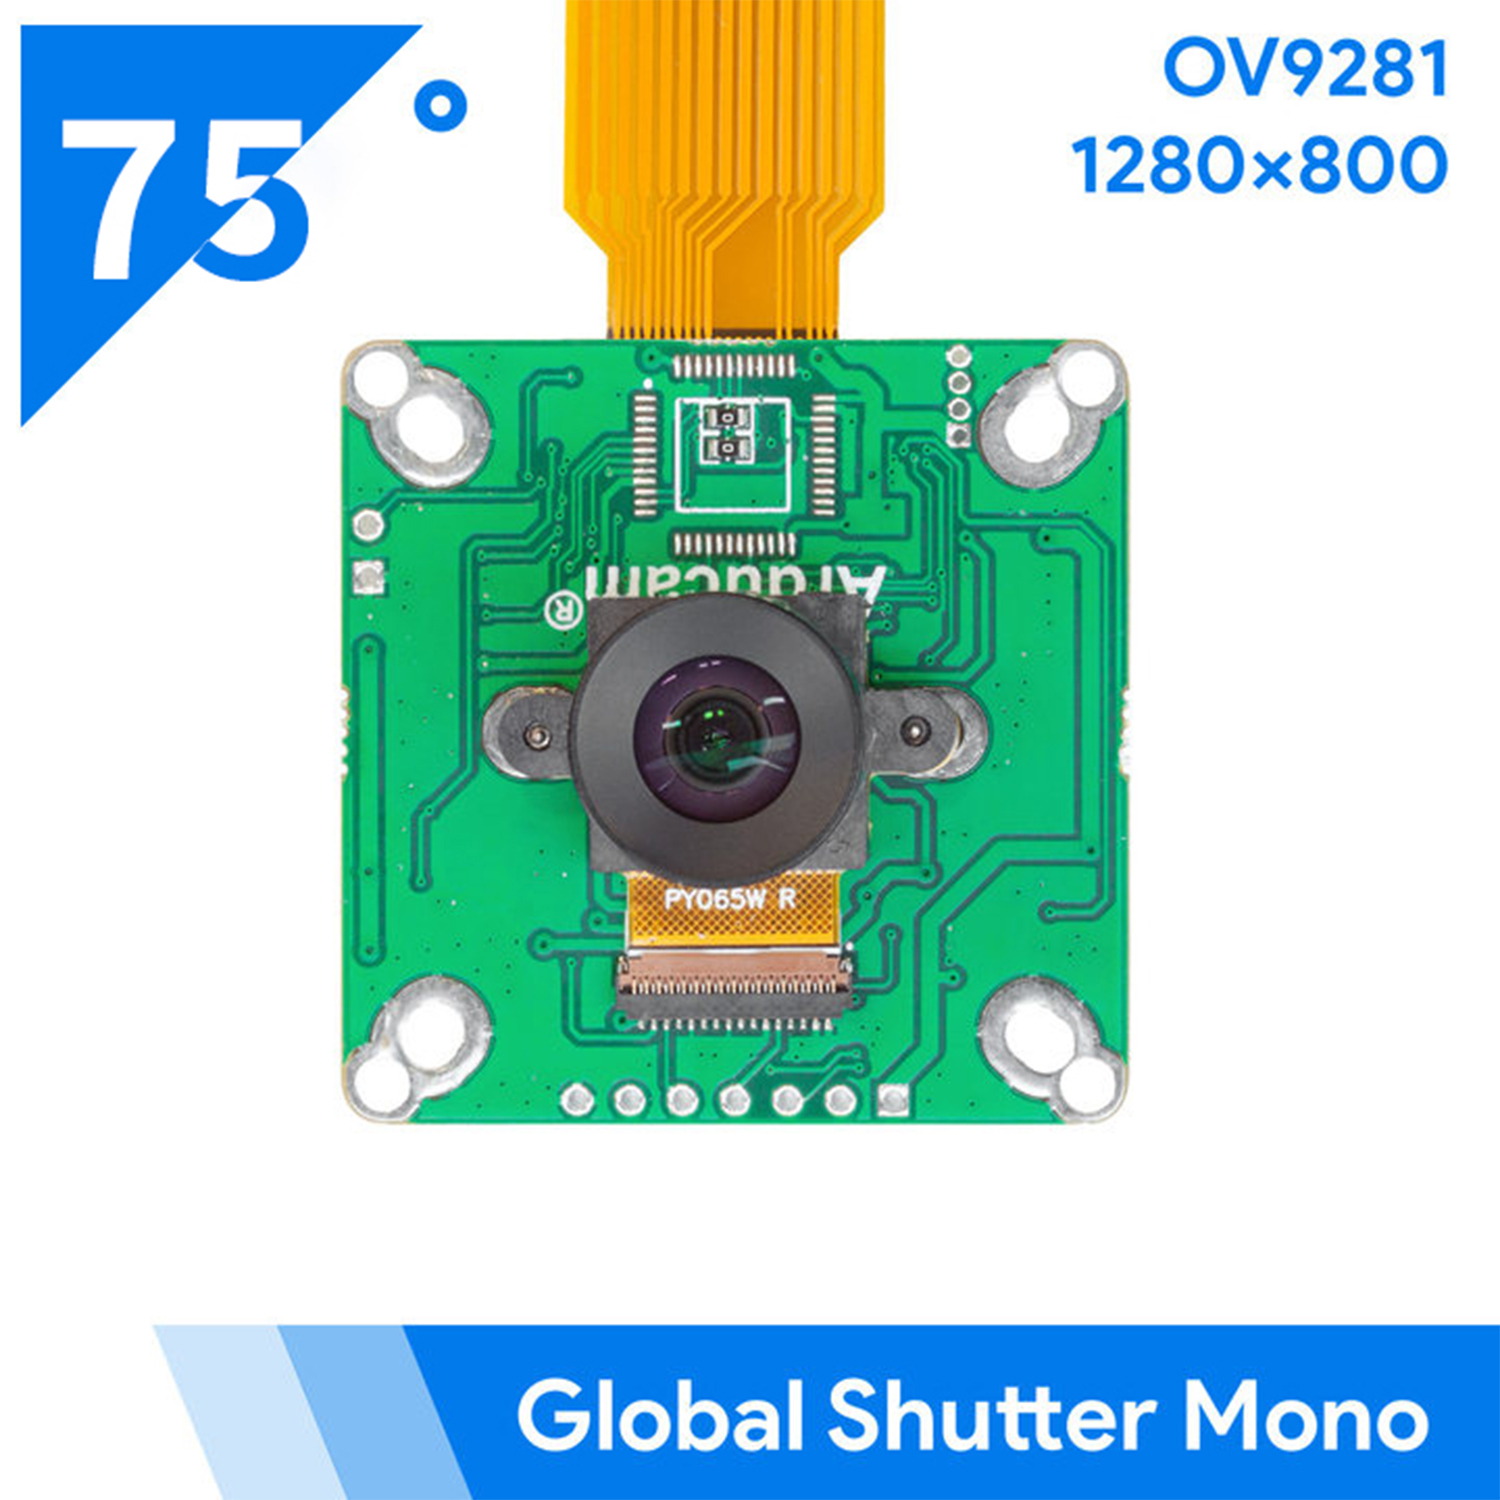 Arducam OV9281 1MP NoIR Mono Global Shutter MIPI Camera for Raspberry Pii - Click to Enlarge